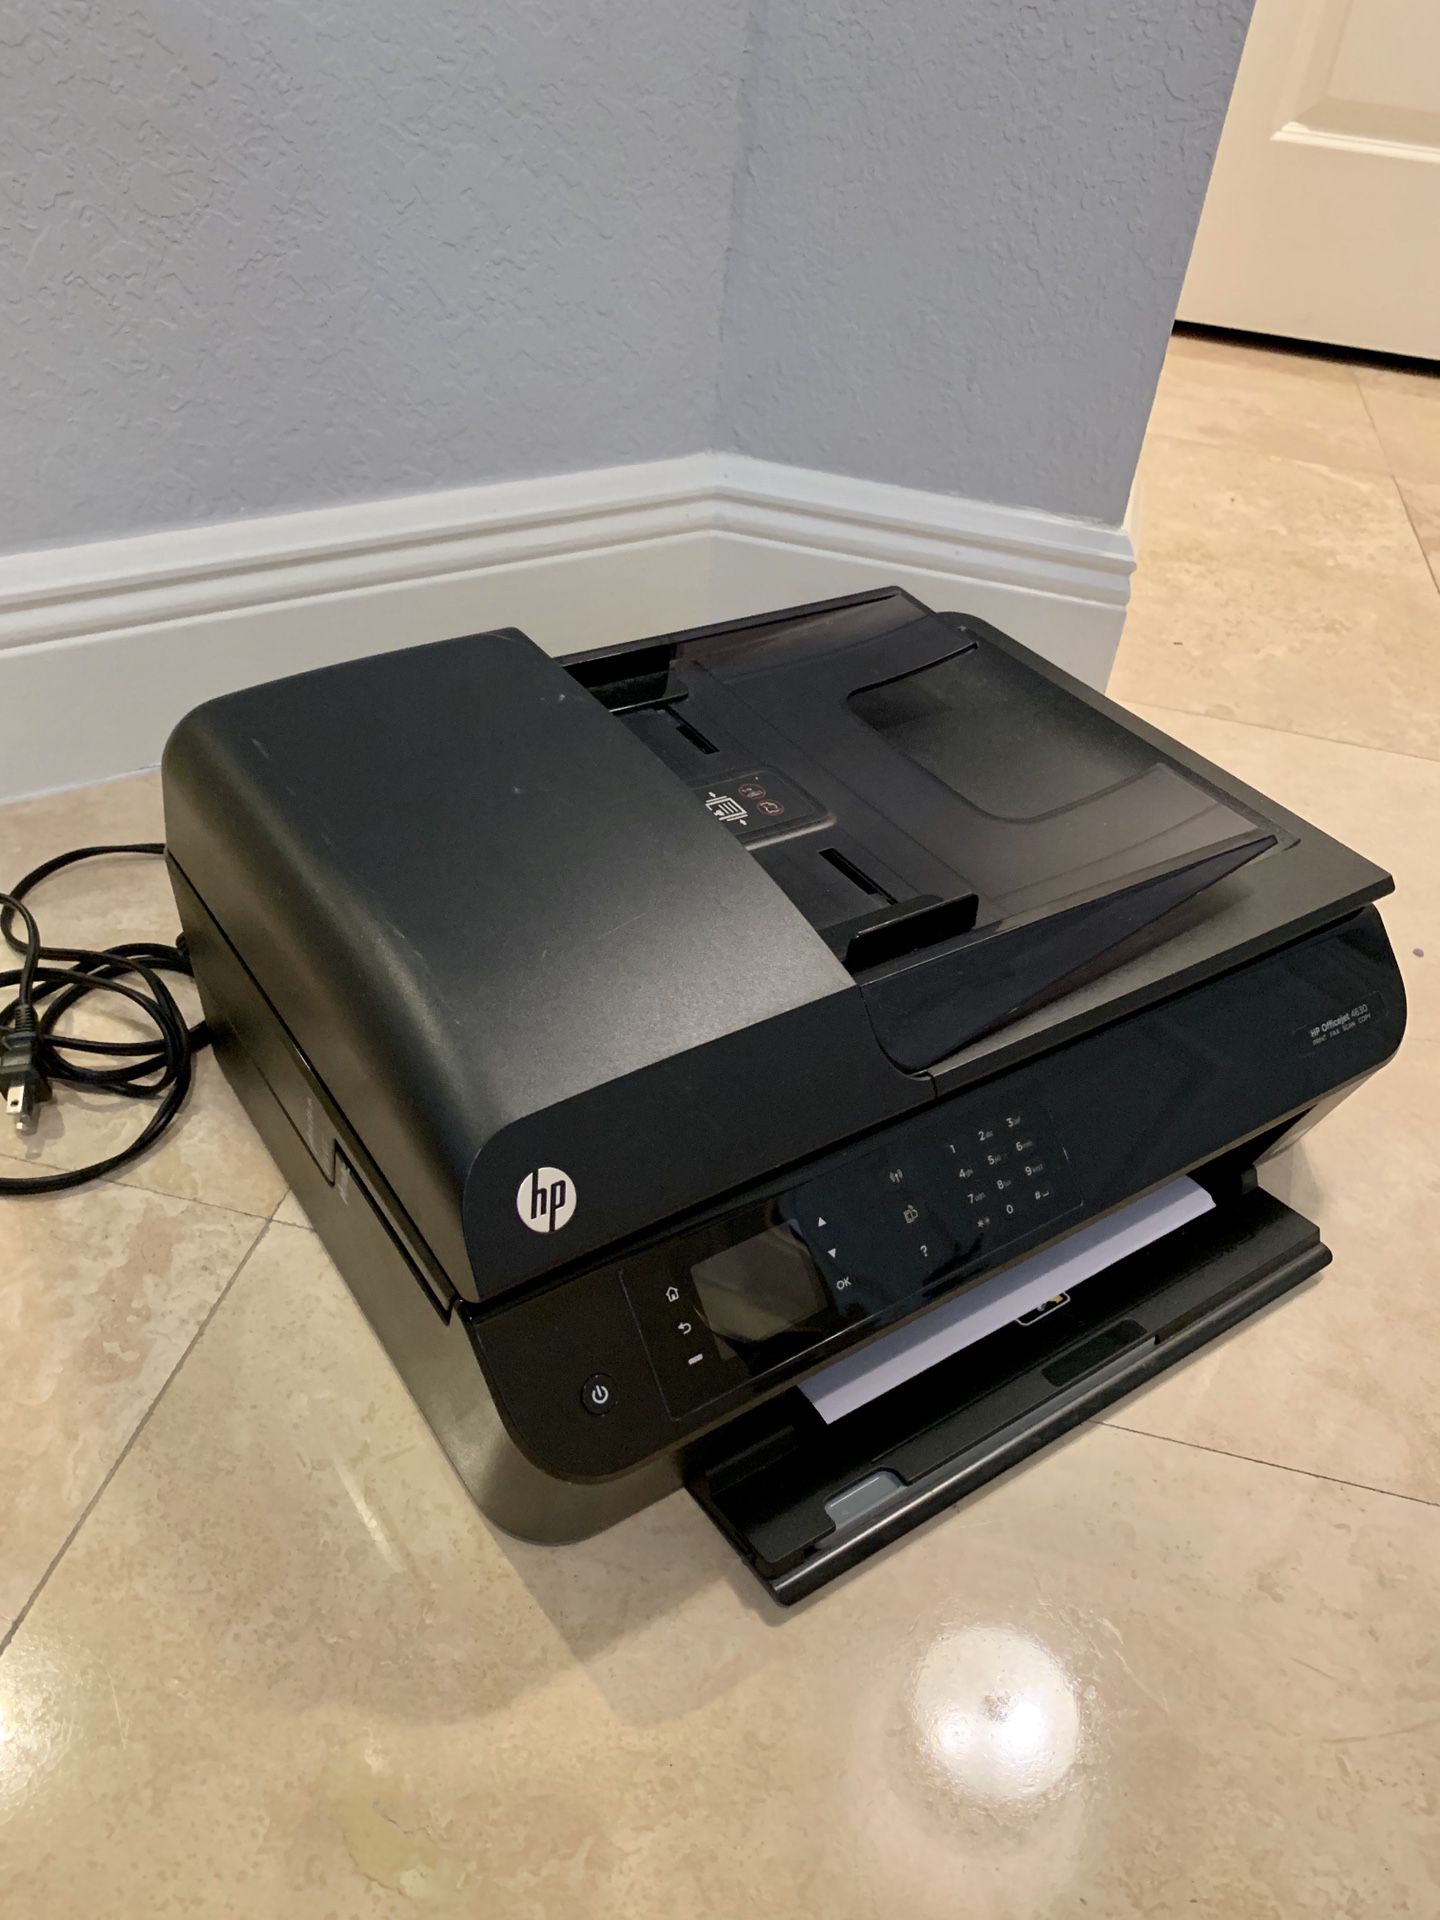 HP OfficeJet 4630 Printer